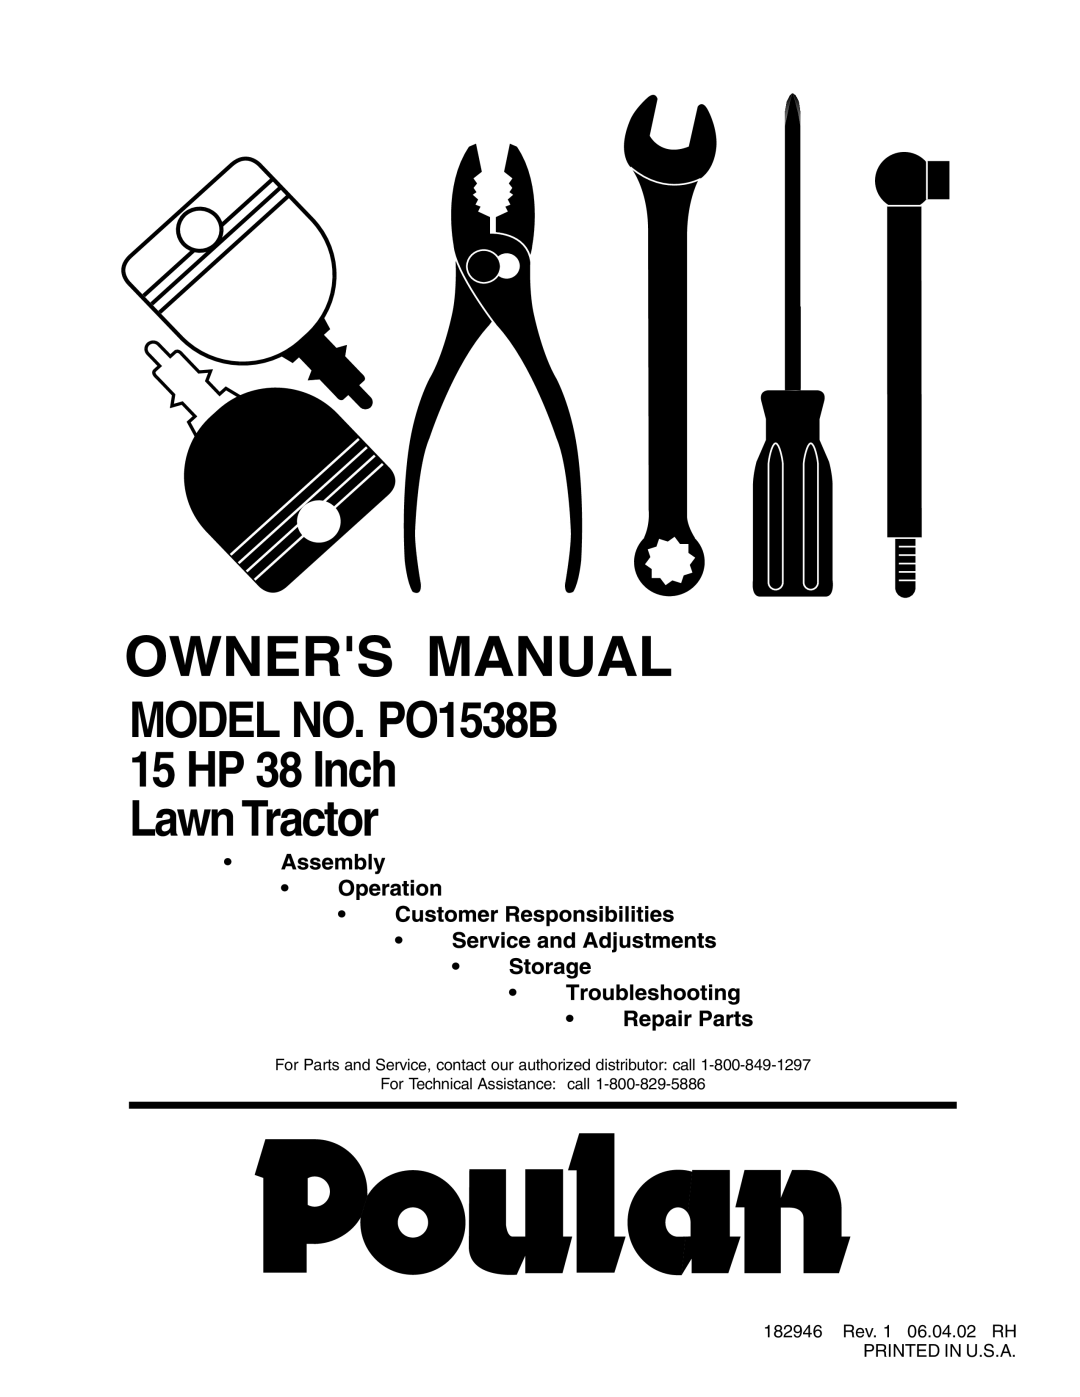 Poulan manual MODEL NO. PO1538B 15 HP 38 Inch Lawn Tractor, 182946 Rev. 1 06.04.02 RH PRINTED IN U.S.A 